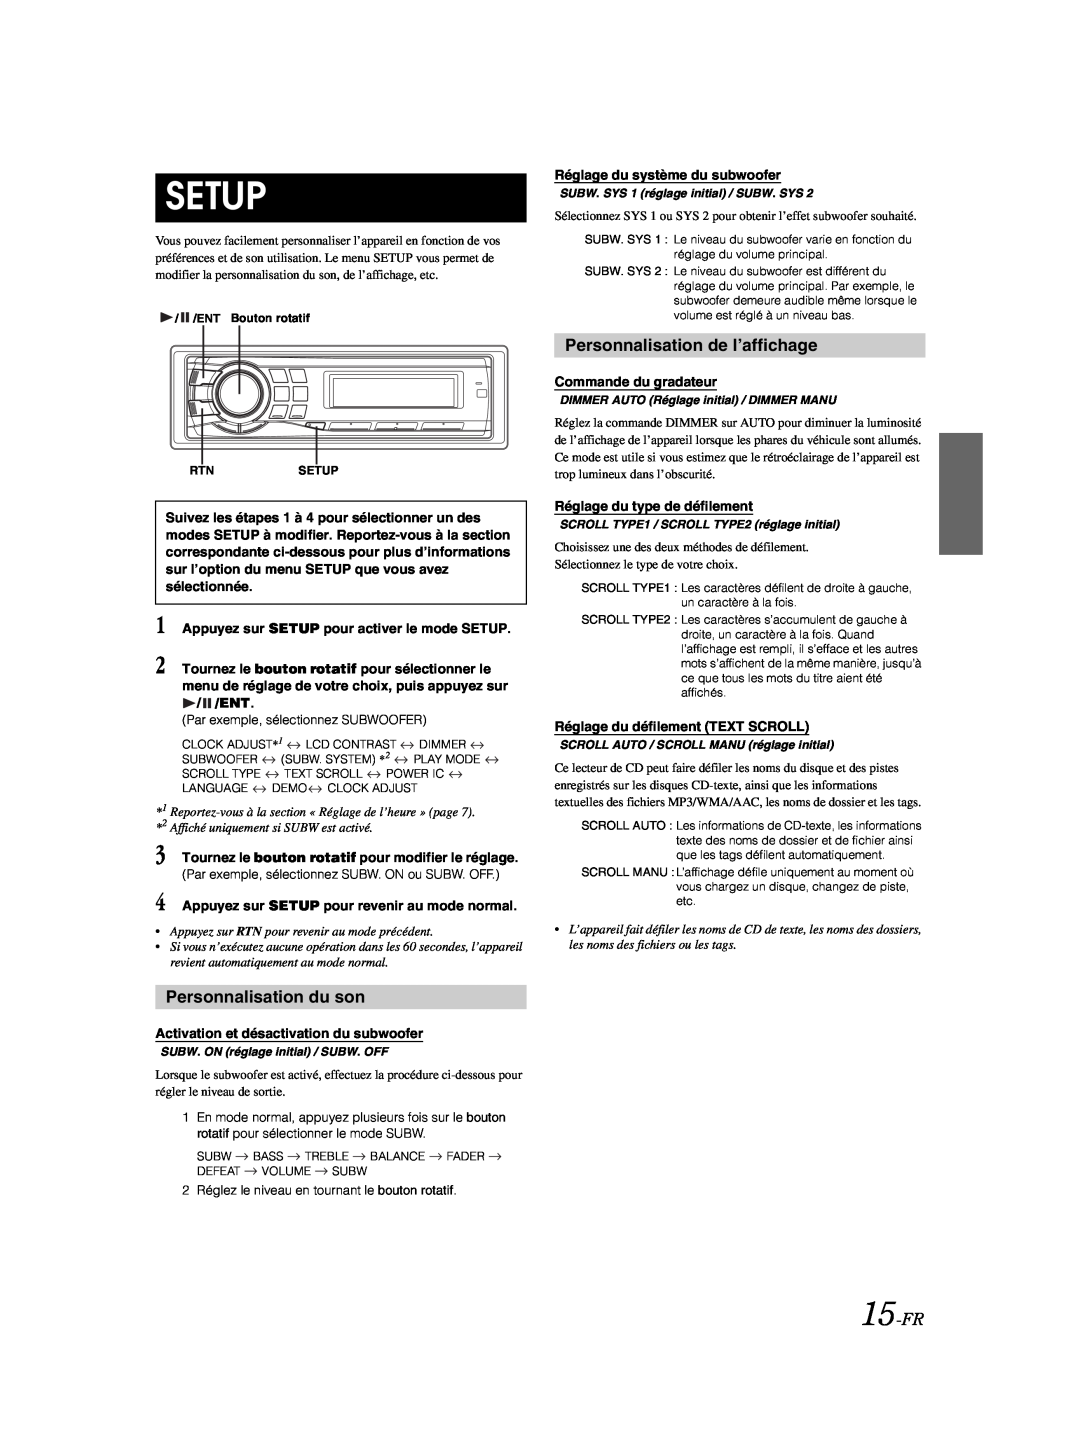 Alpine CDE-9881 owner manual Personnalisation du son, Personnalisation de l’affichage, 15-FR, Setup 